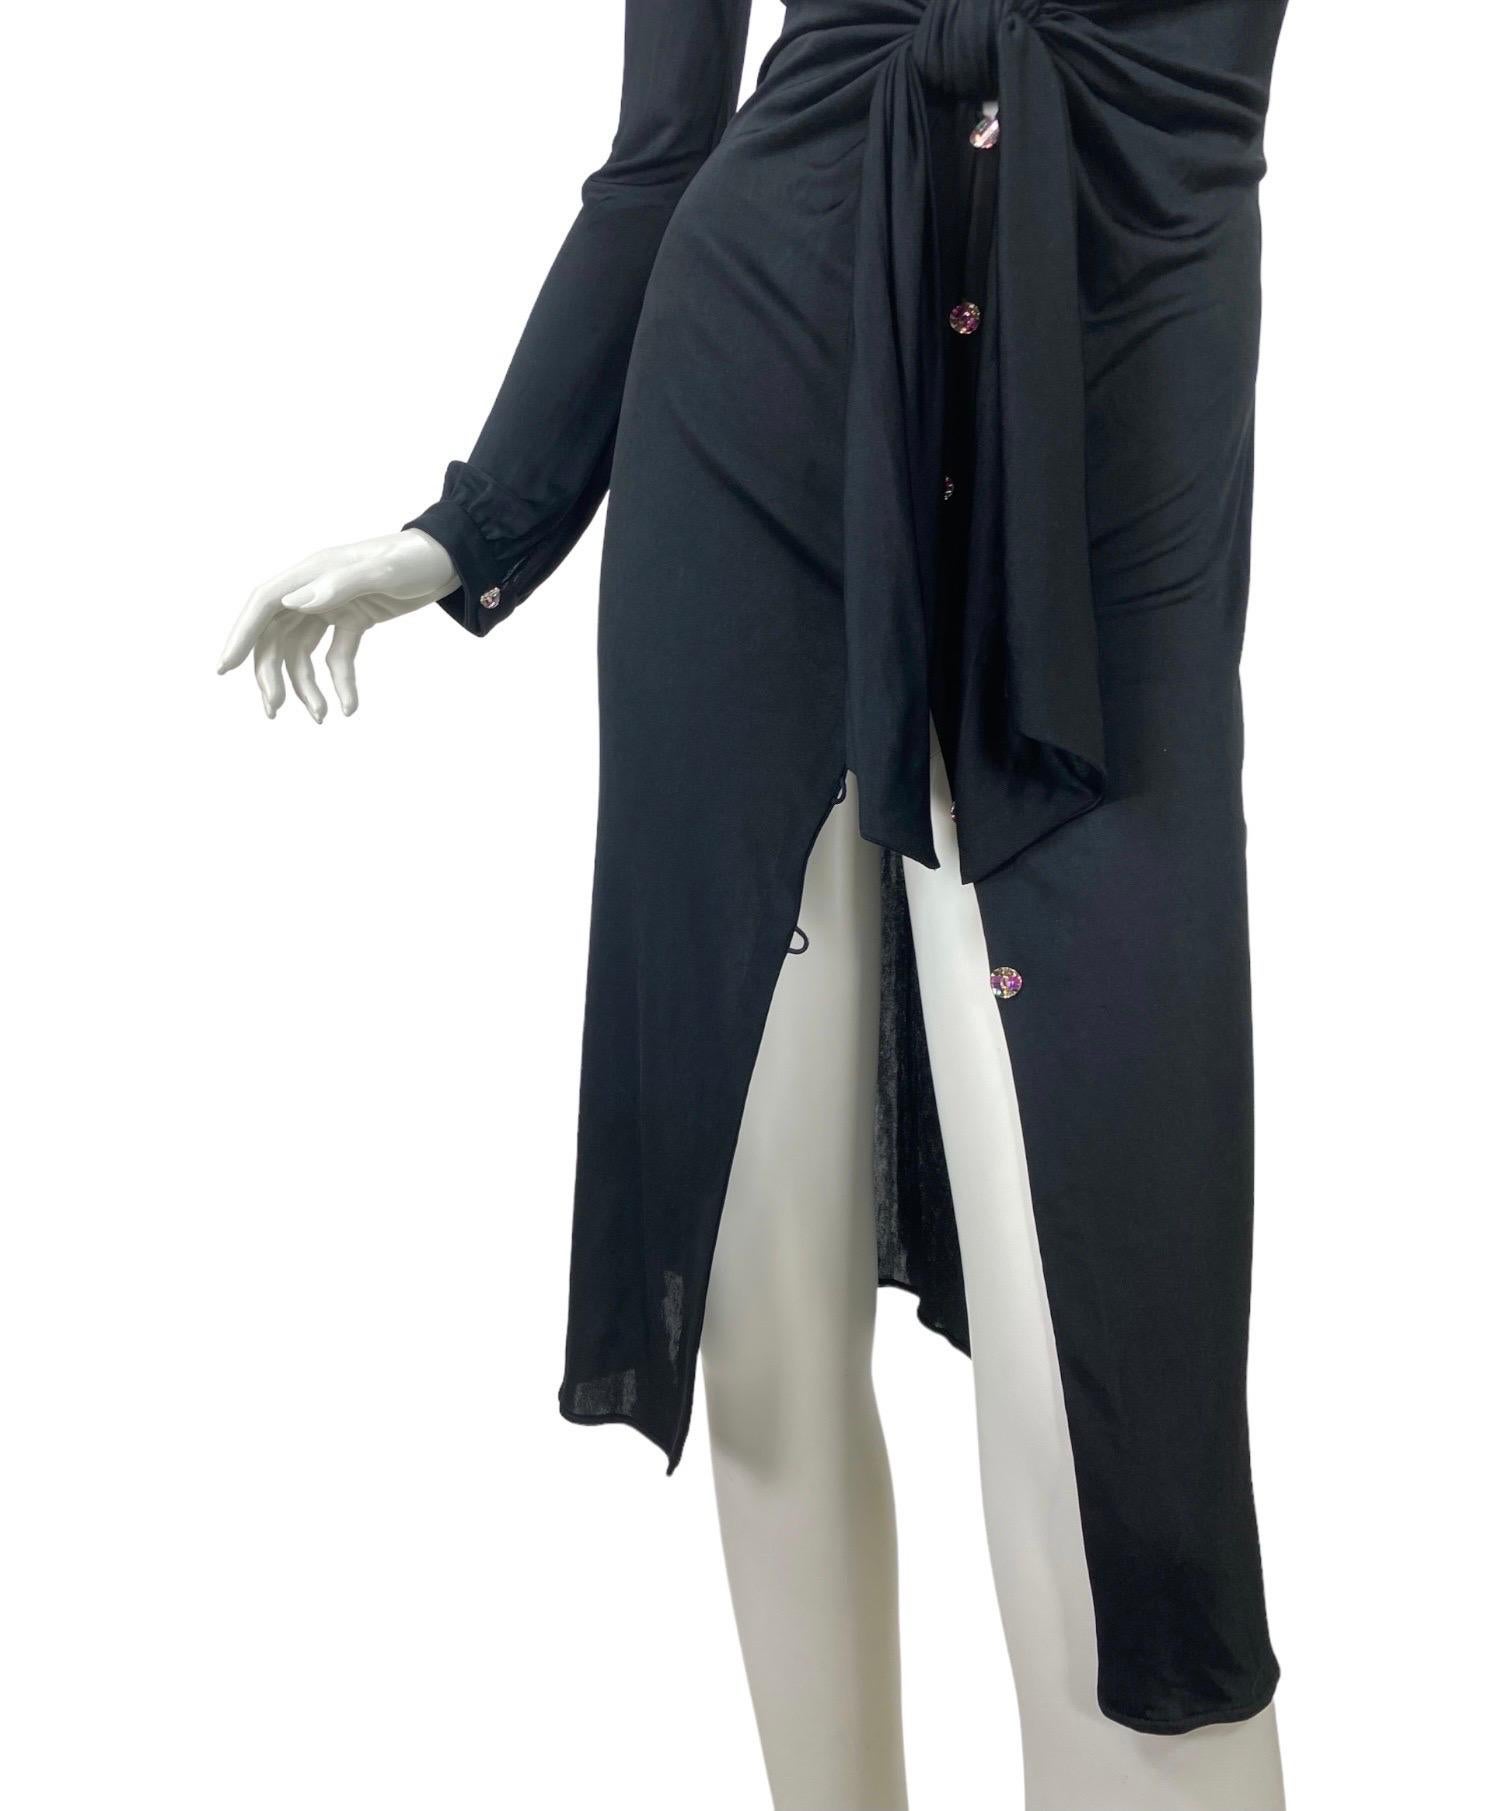 S/S 2000 Vintage Gianni Versace Couture Runway Black Deep V-Neck Dress For Sale 4